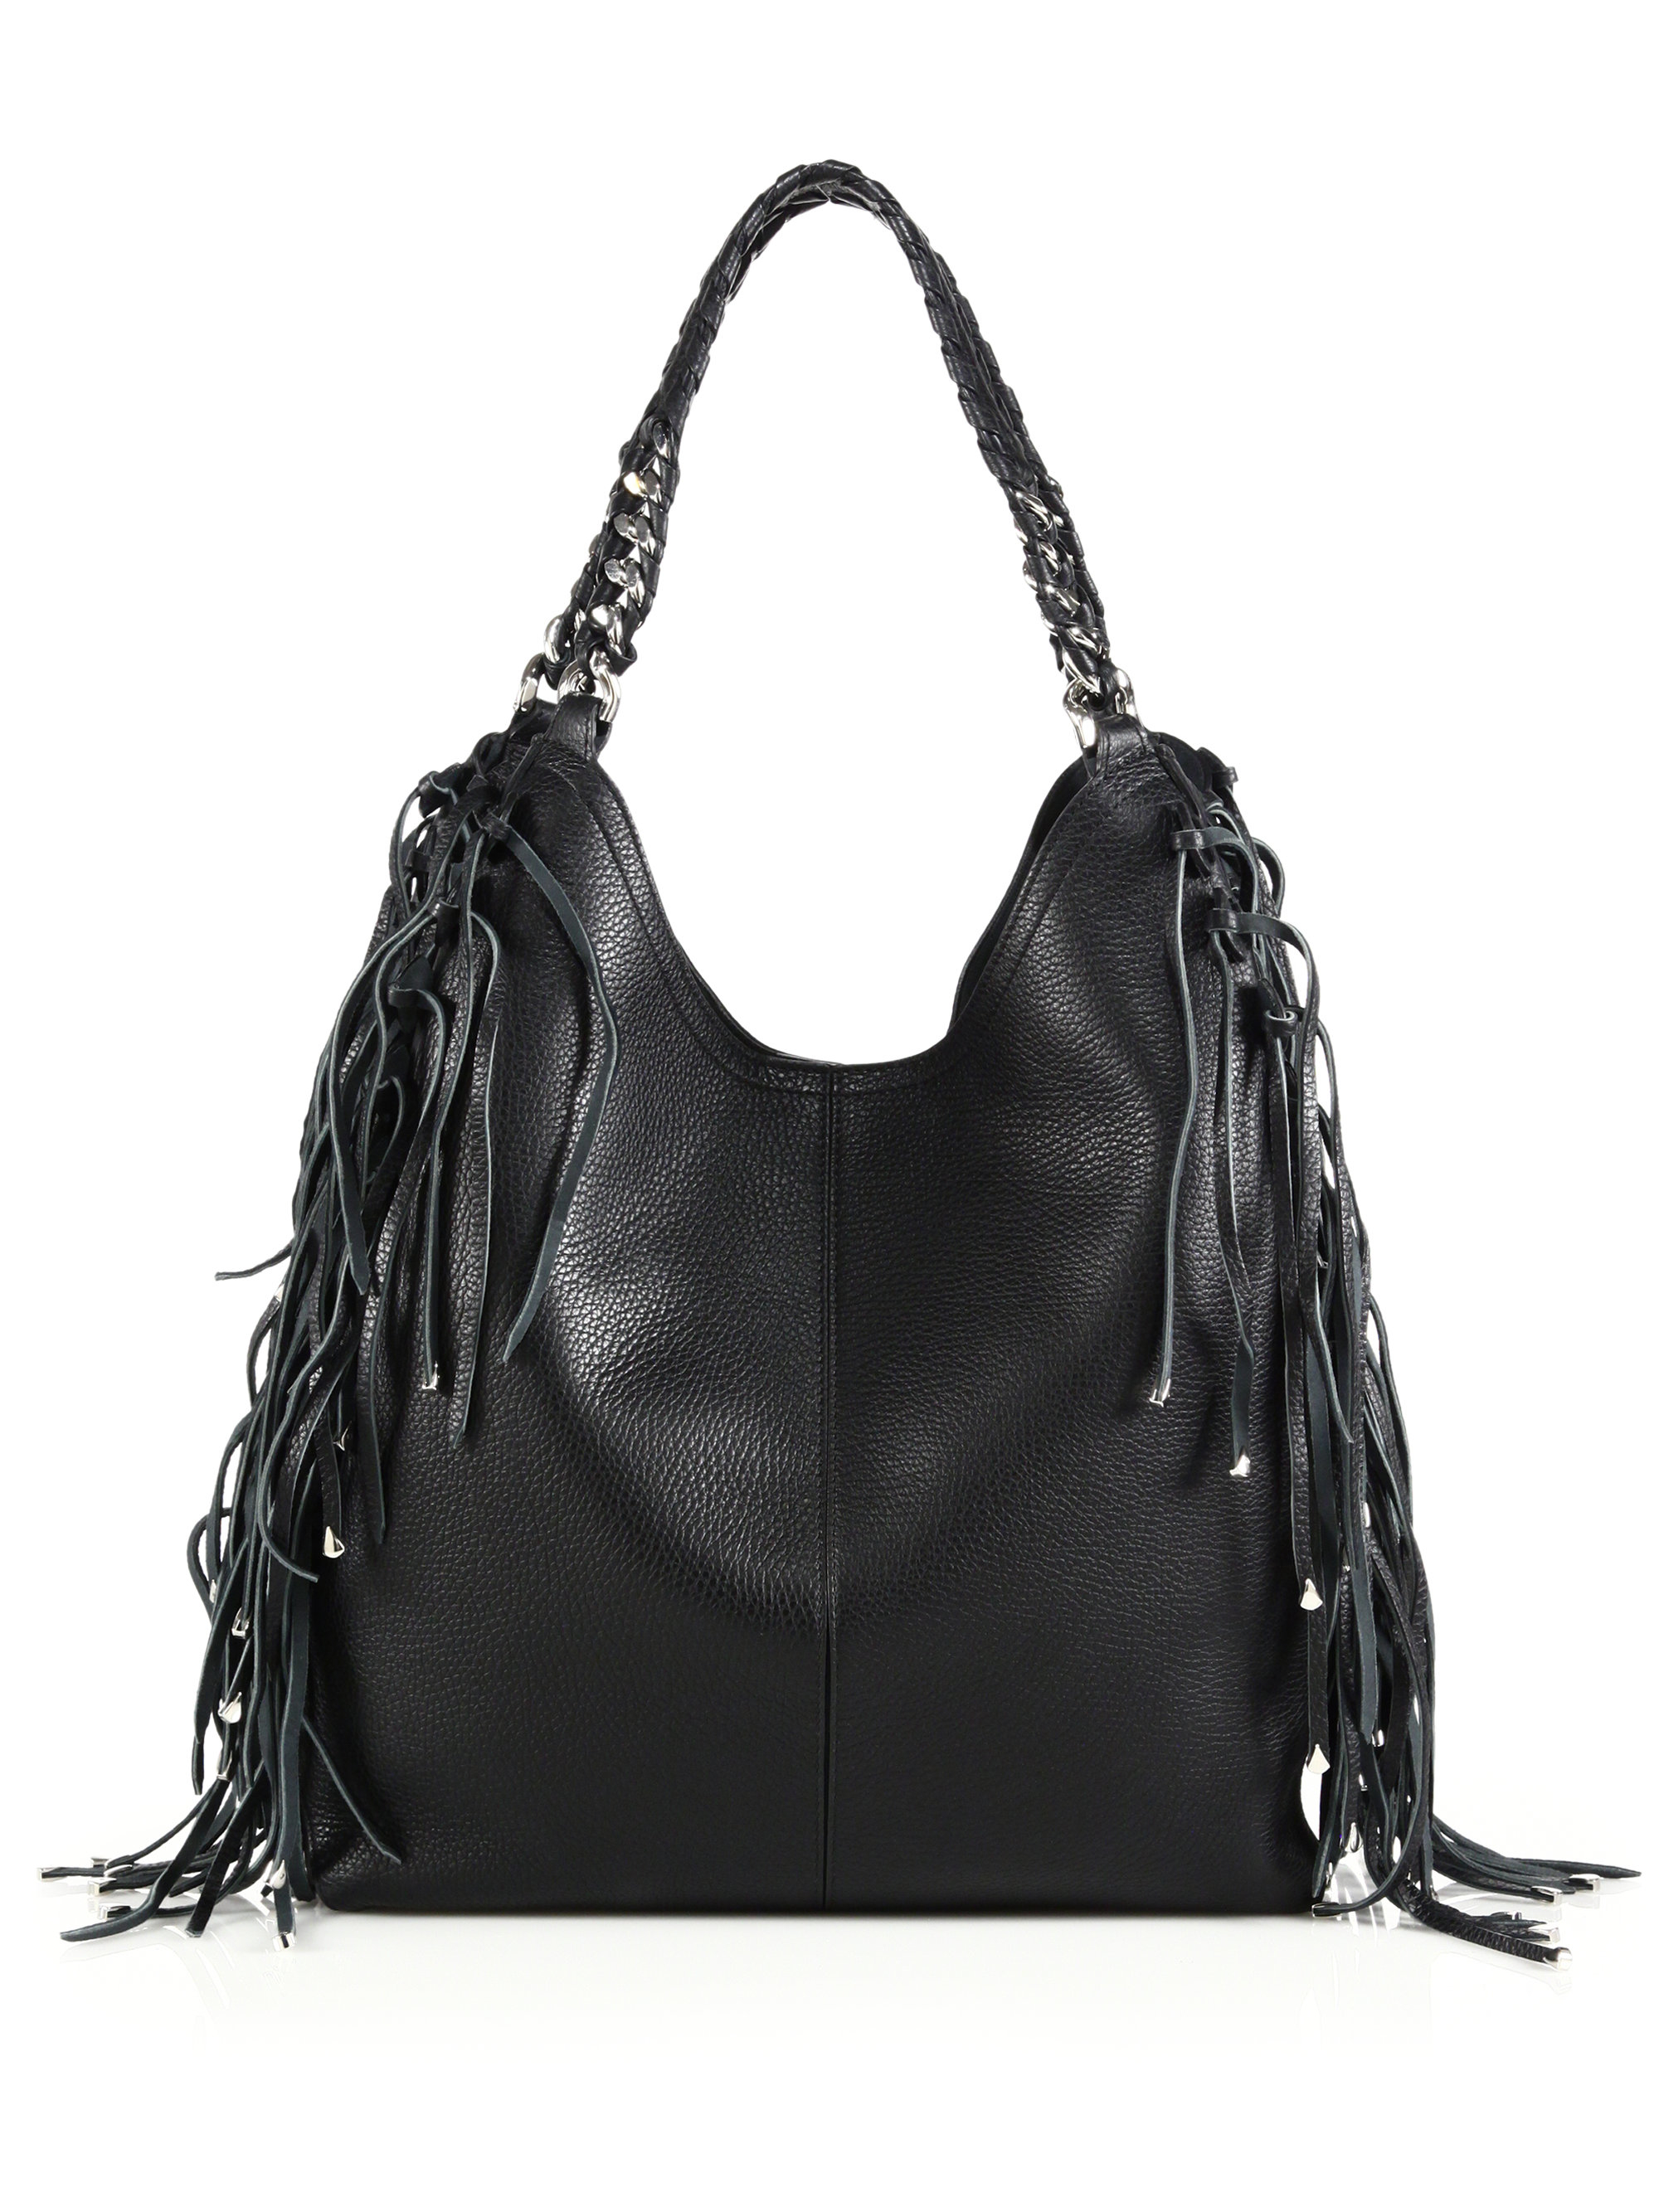 Lyst - Roberto Cavalli Fringed Leather Hobo Bag in Black